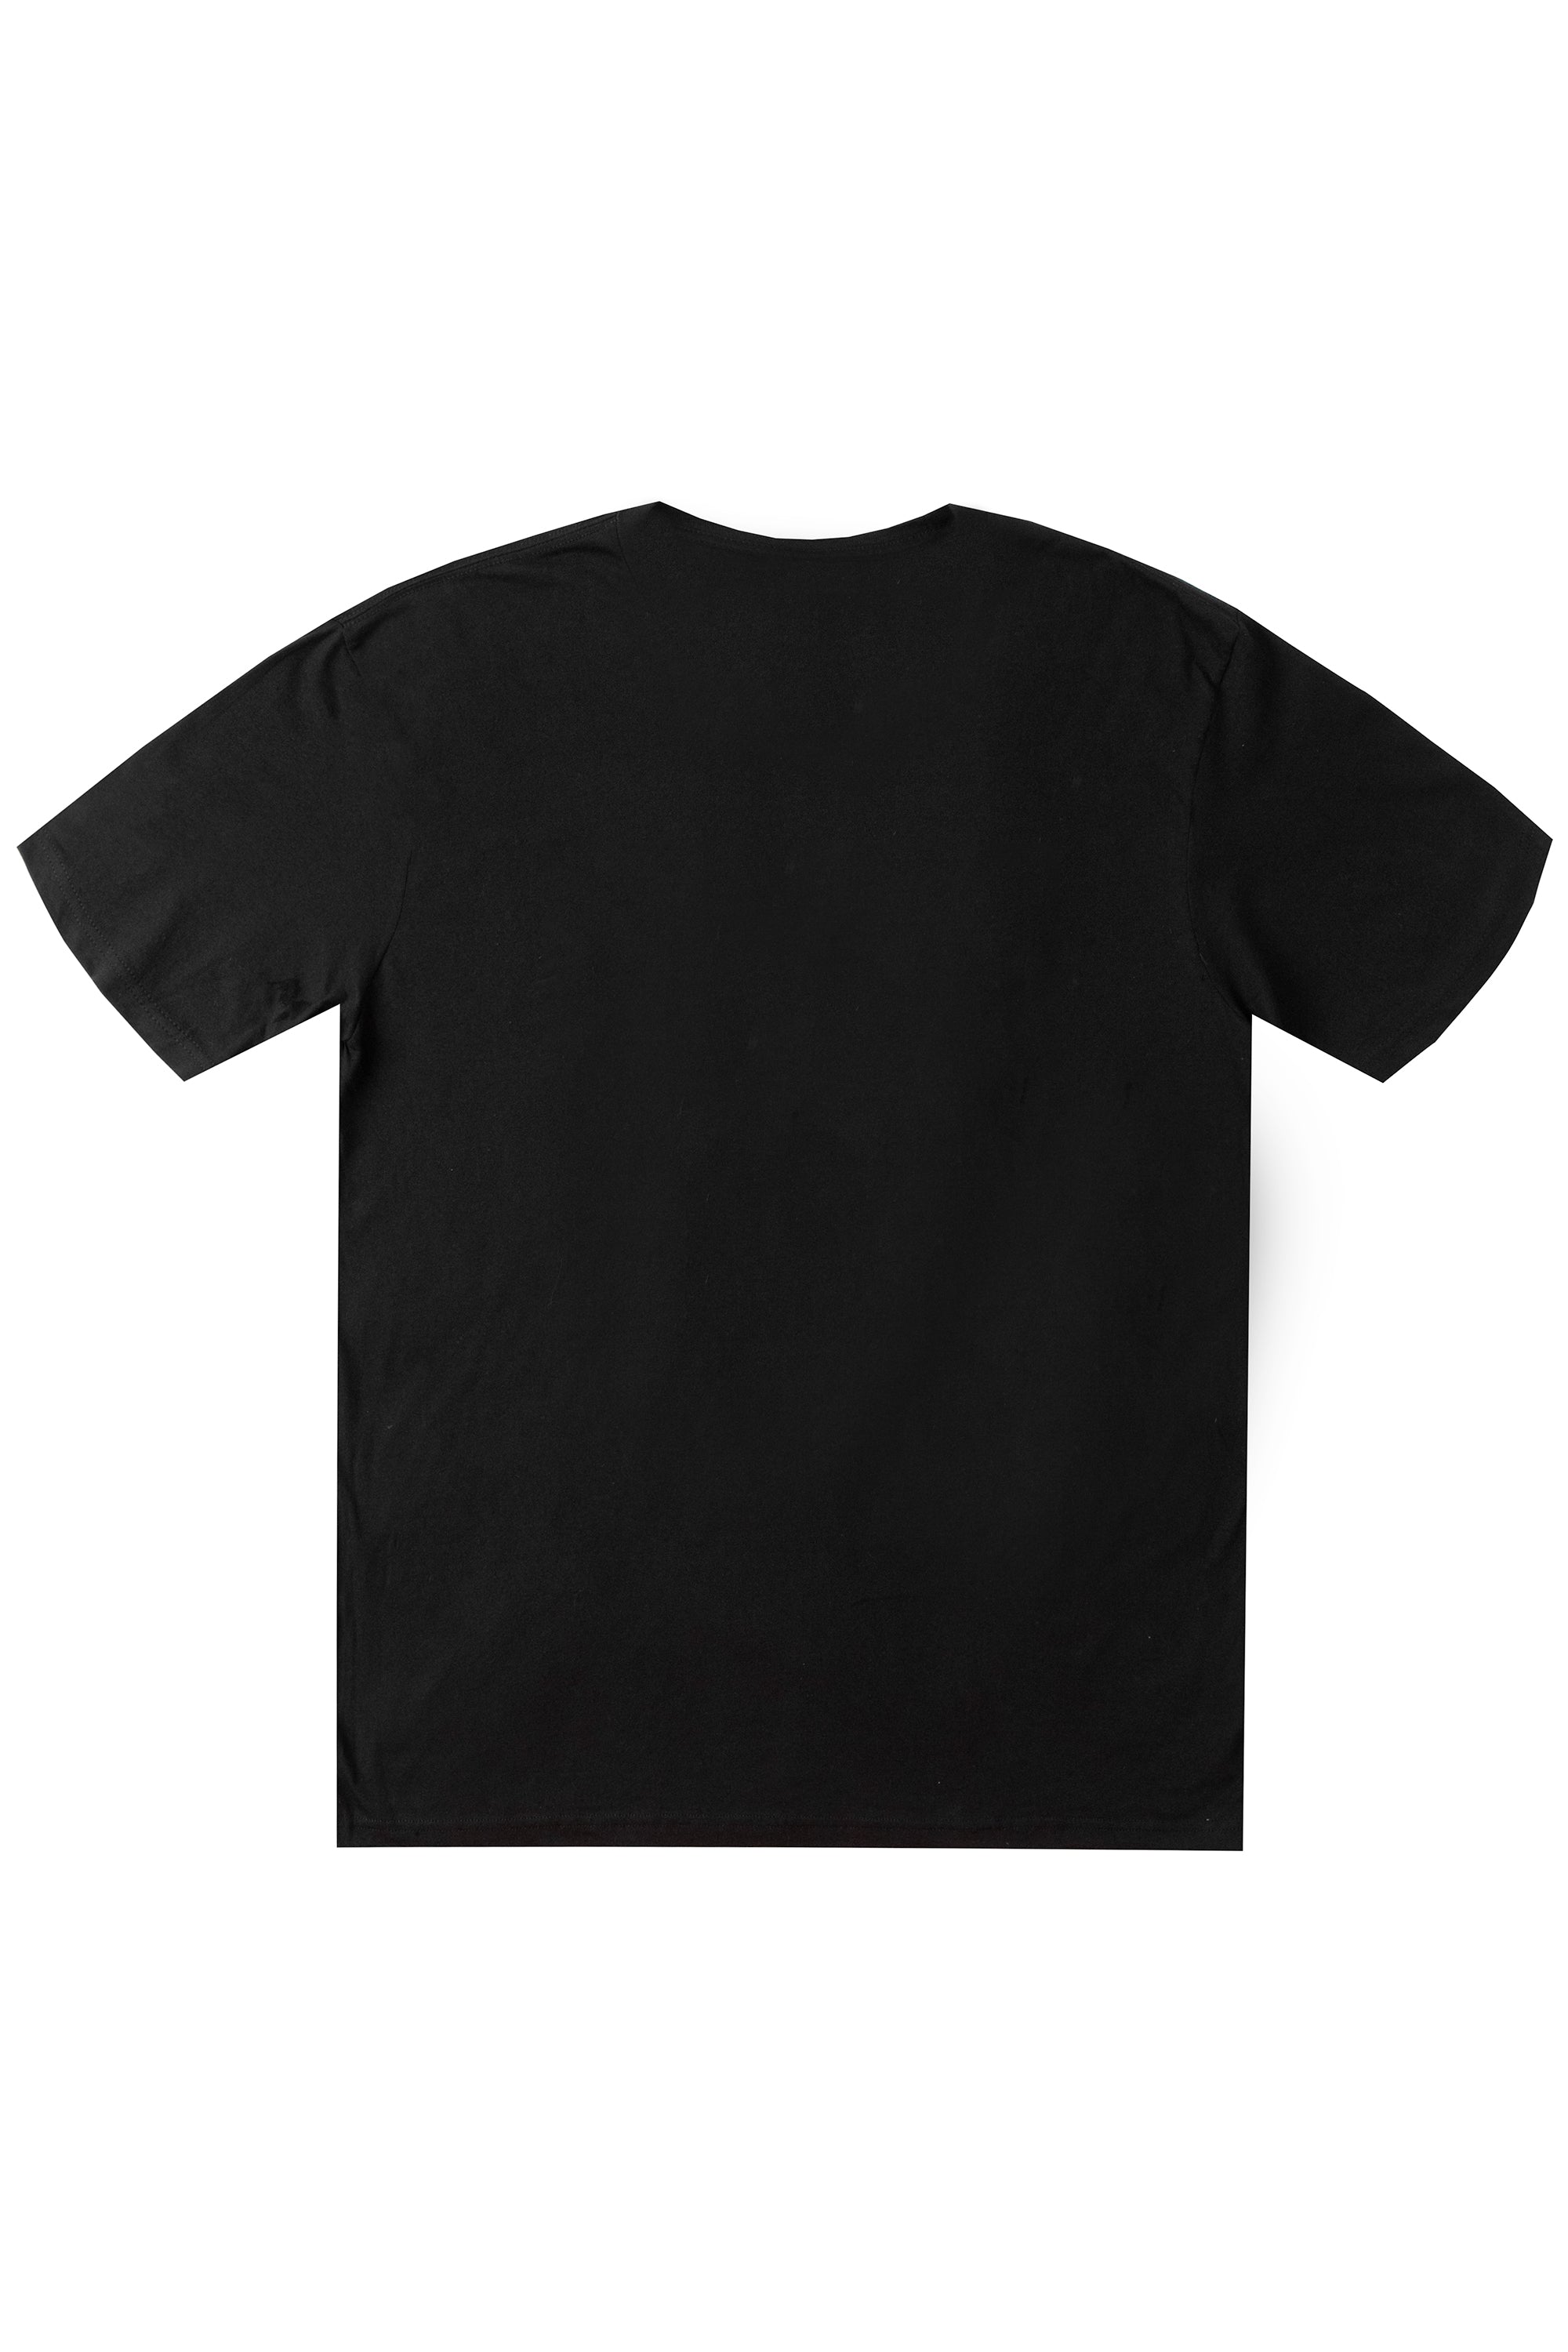 Octavio Printed T-Shirt- Black